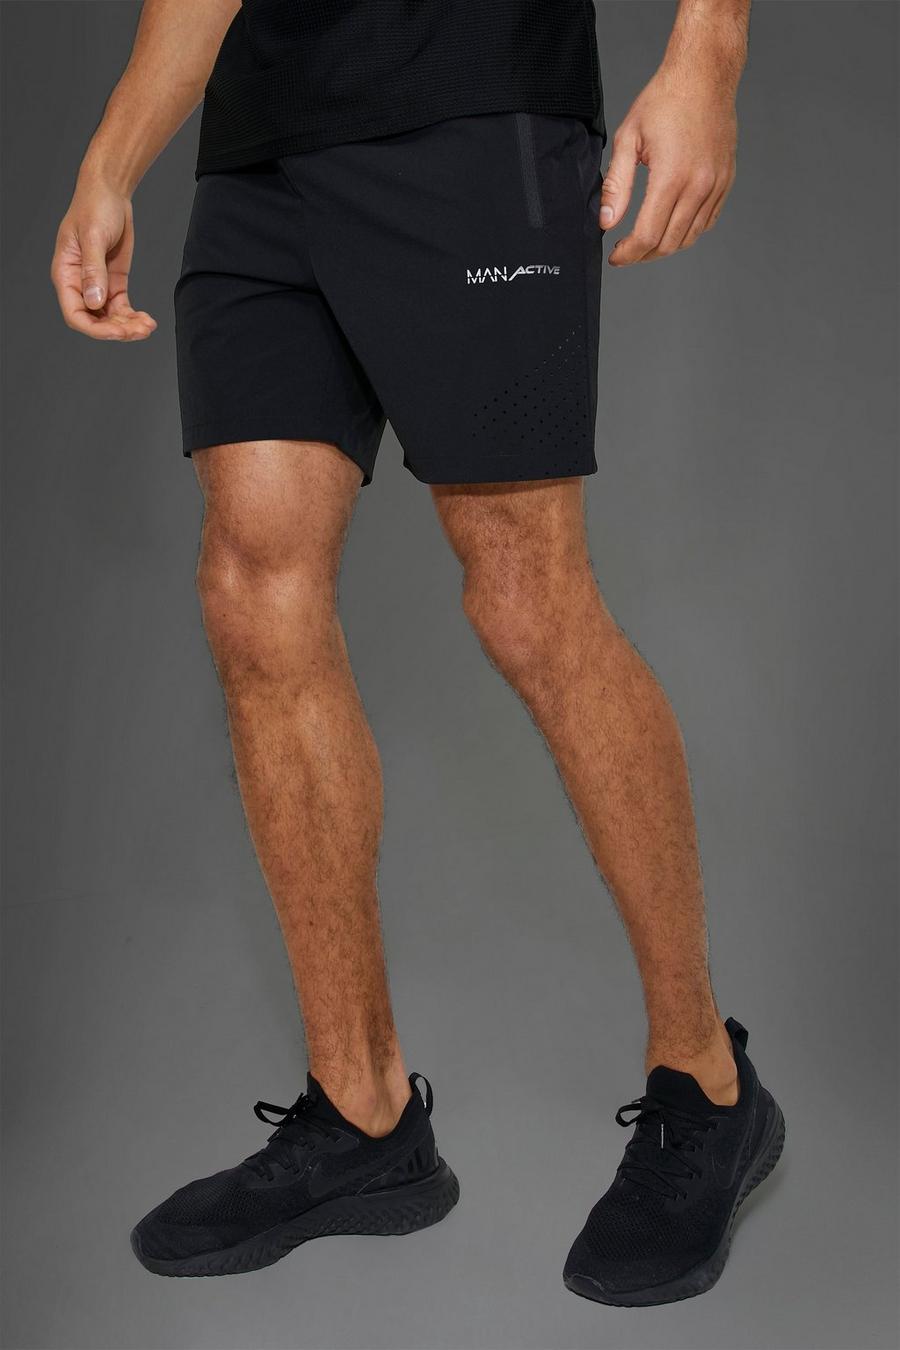 Pantalón corto MAN Active deportivo de nailon con perforaciones, Black negro